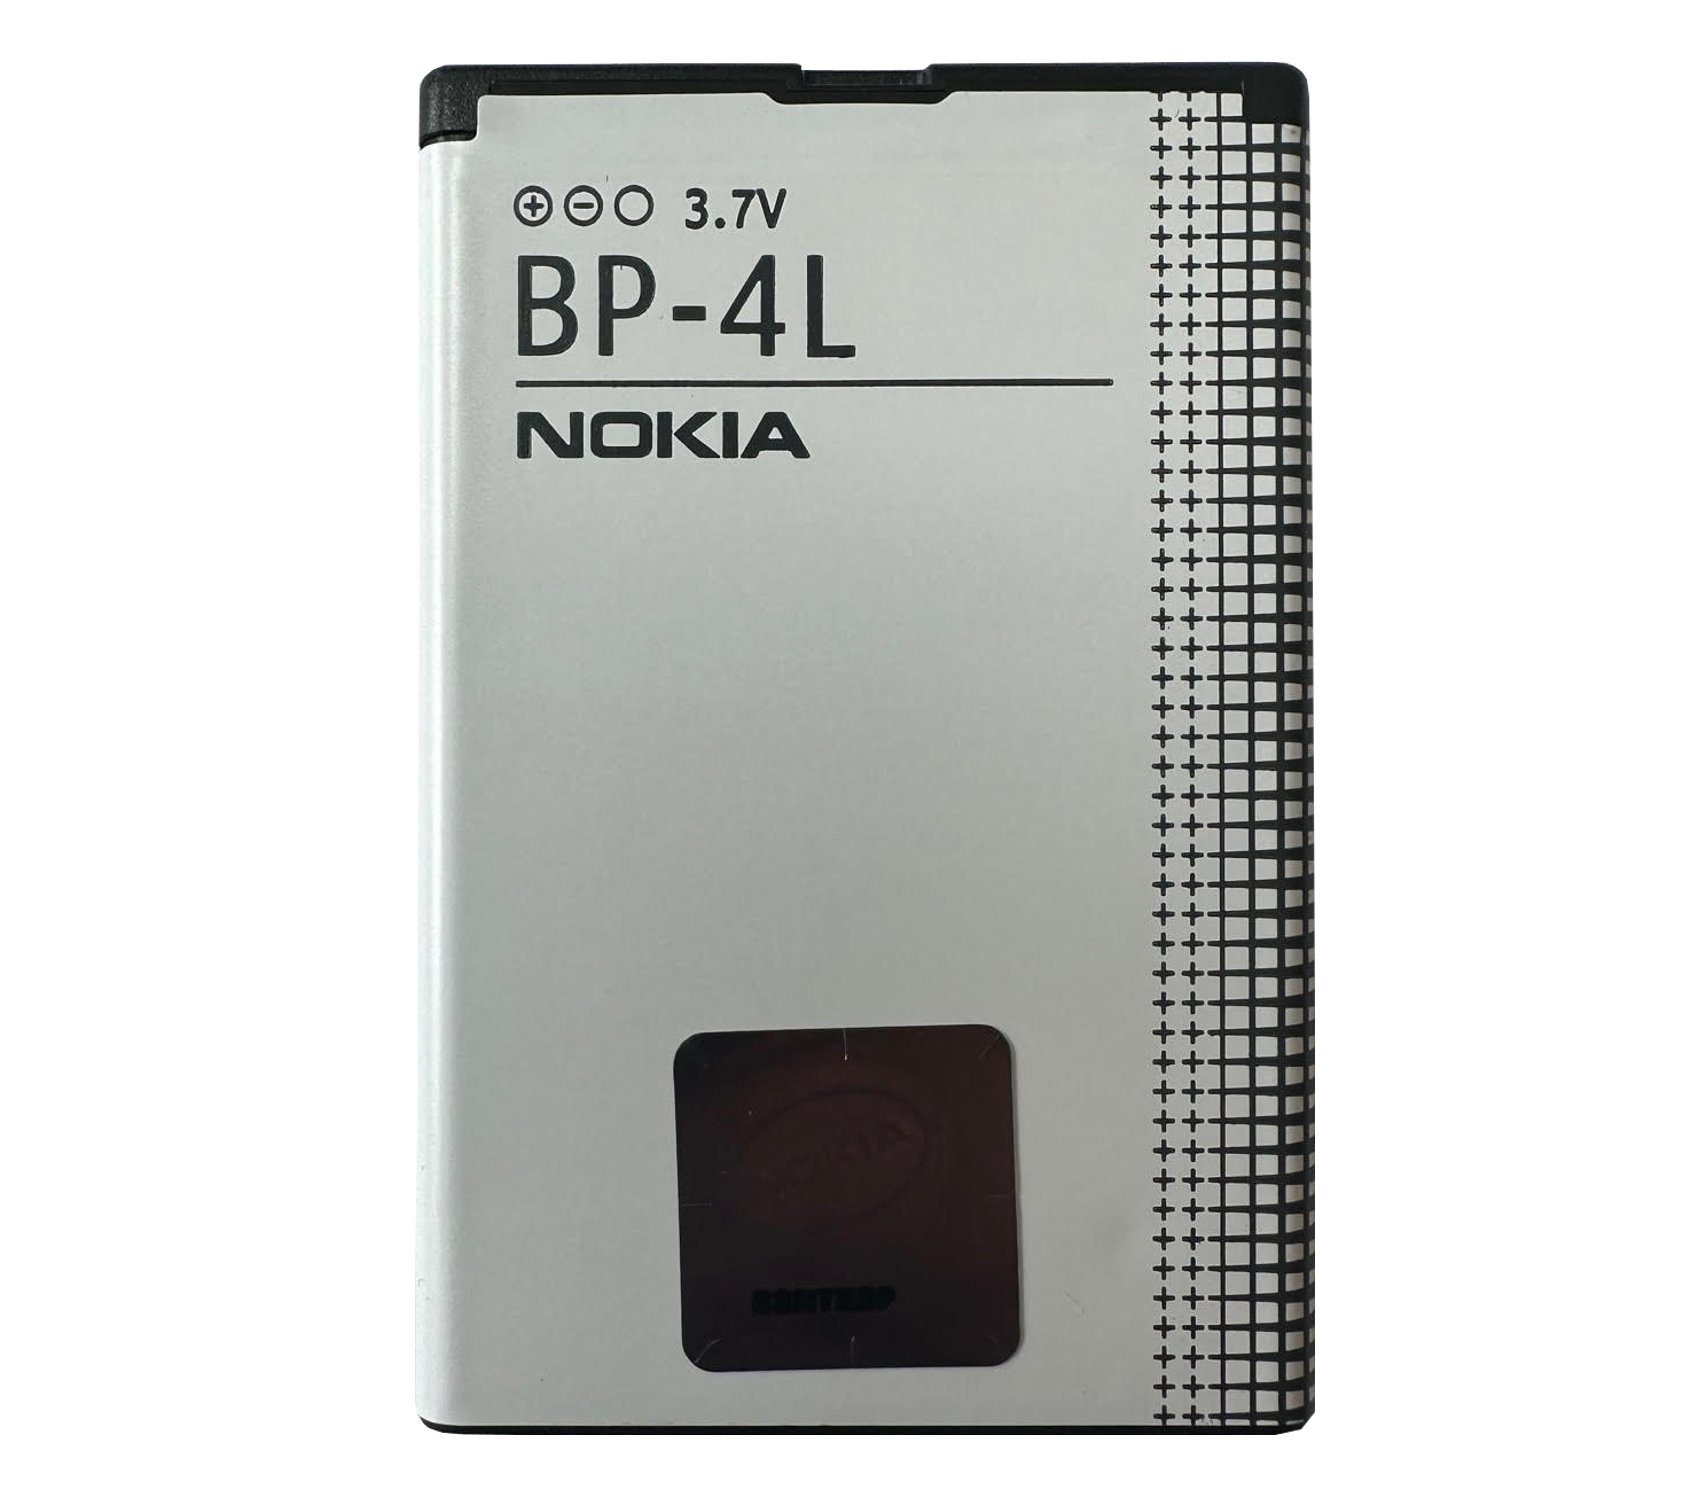 Nokia Original Nokia BP-4L Akku 1500 mAh Nokia E52 E55 E61i E71 N97 N810 Handy-Akku Nokia BP-4L 1500 mAh (3,7 V), Schnelles und effizientes Laden, Li-Ionen Zellen, Überladungsschutz